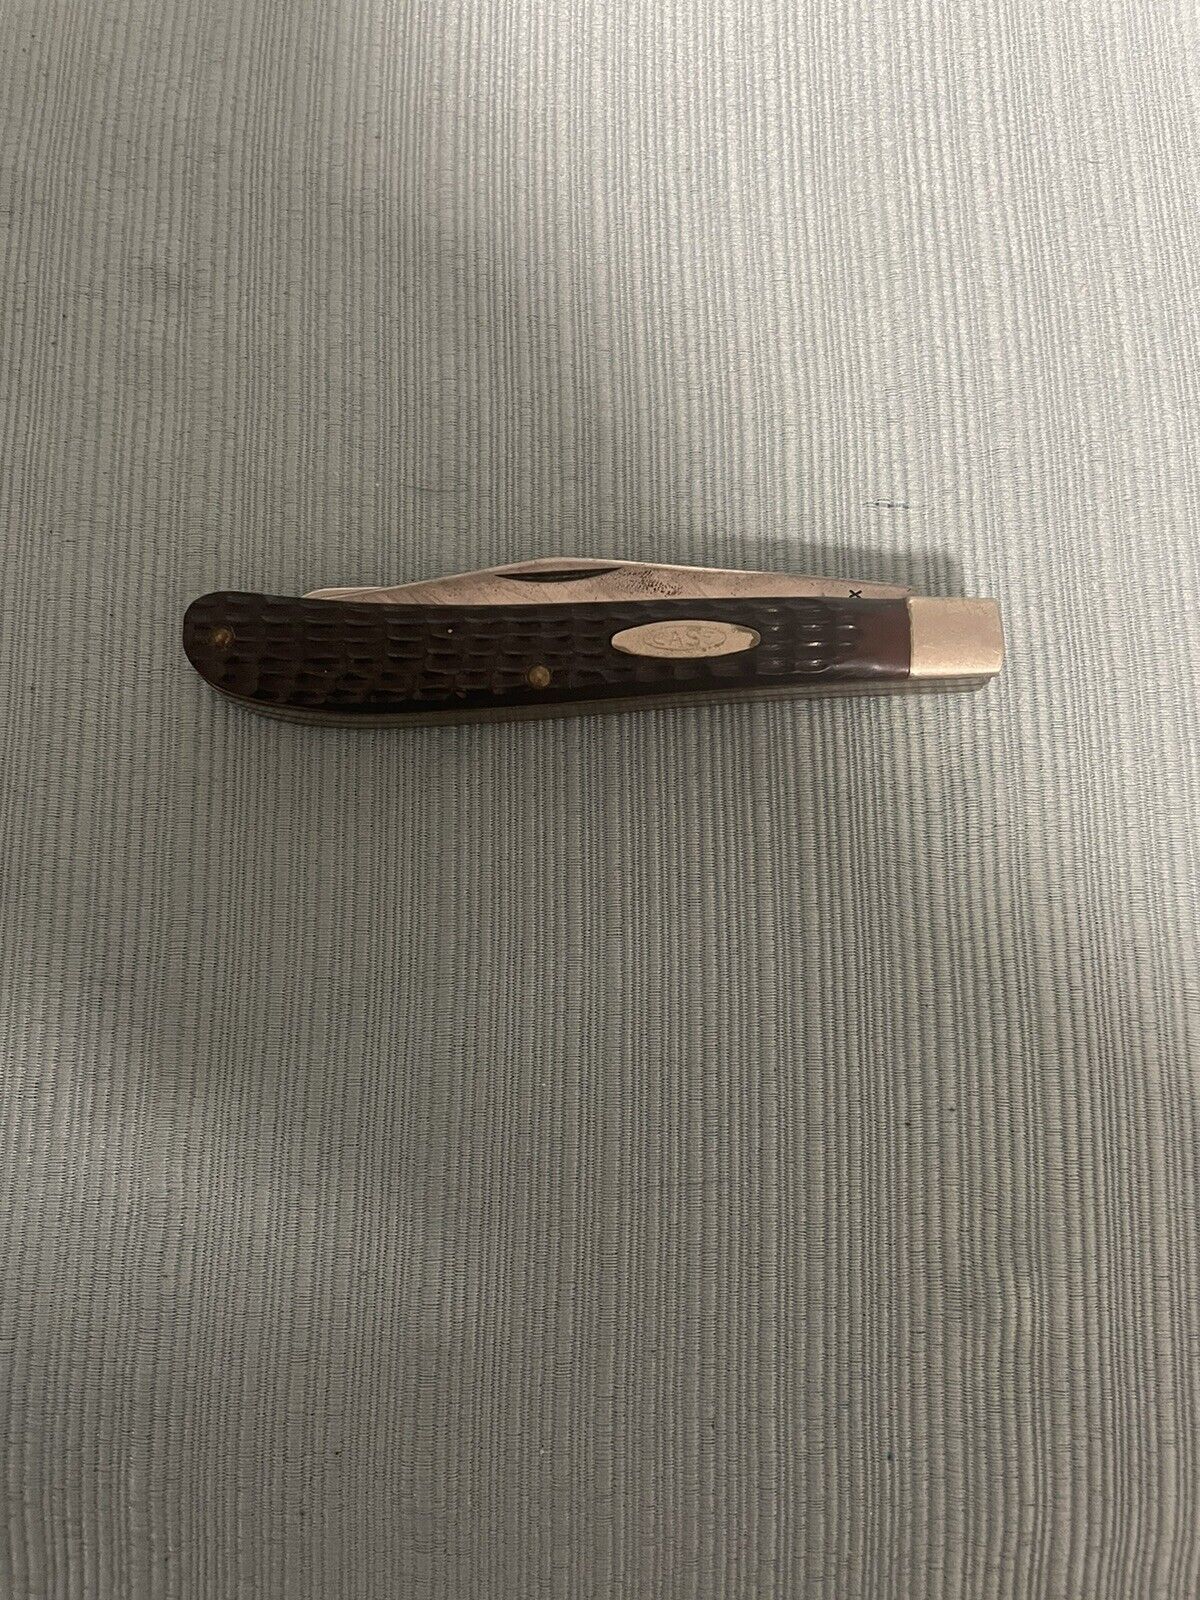 Case XX Pocket Knife 1976 Trapper